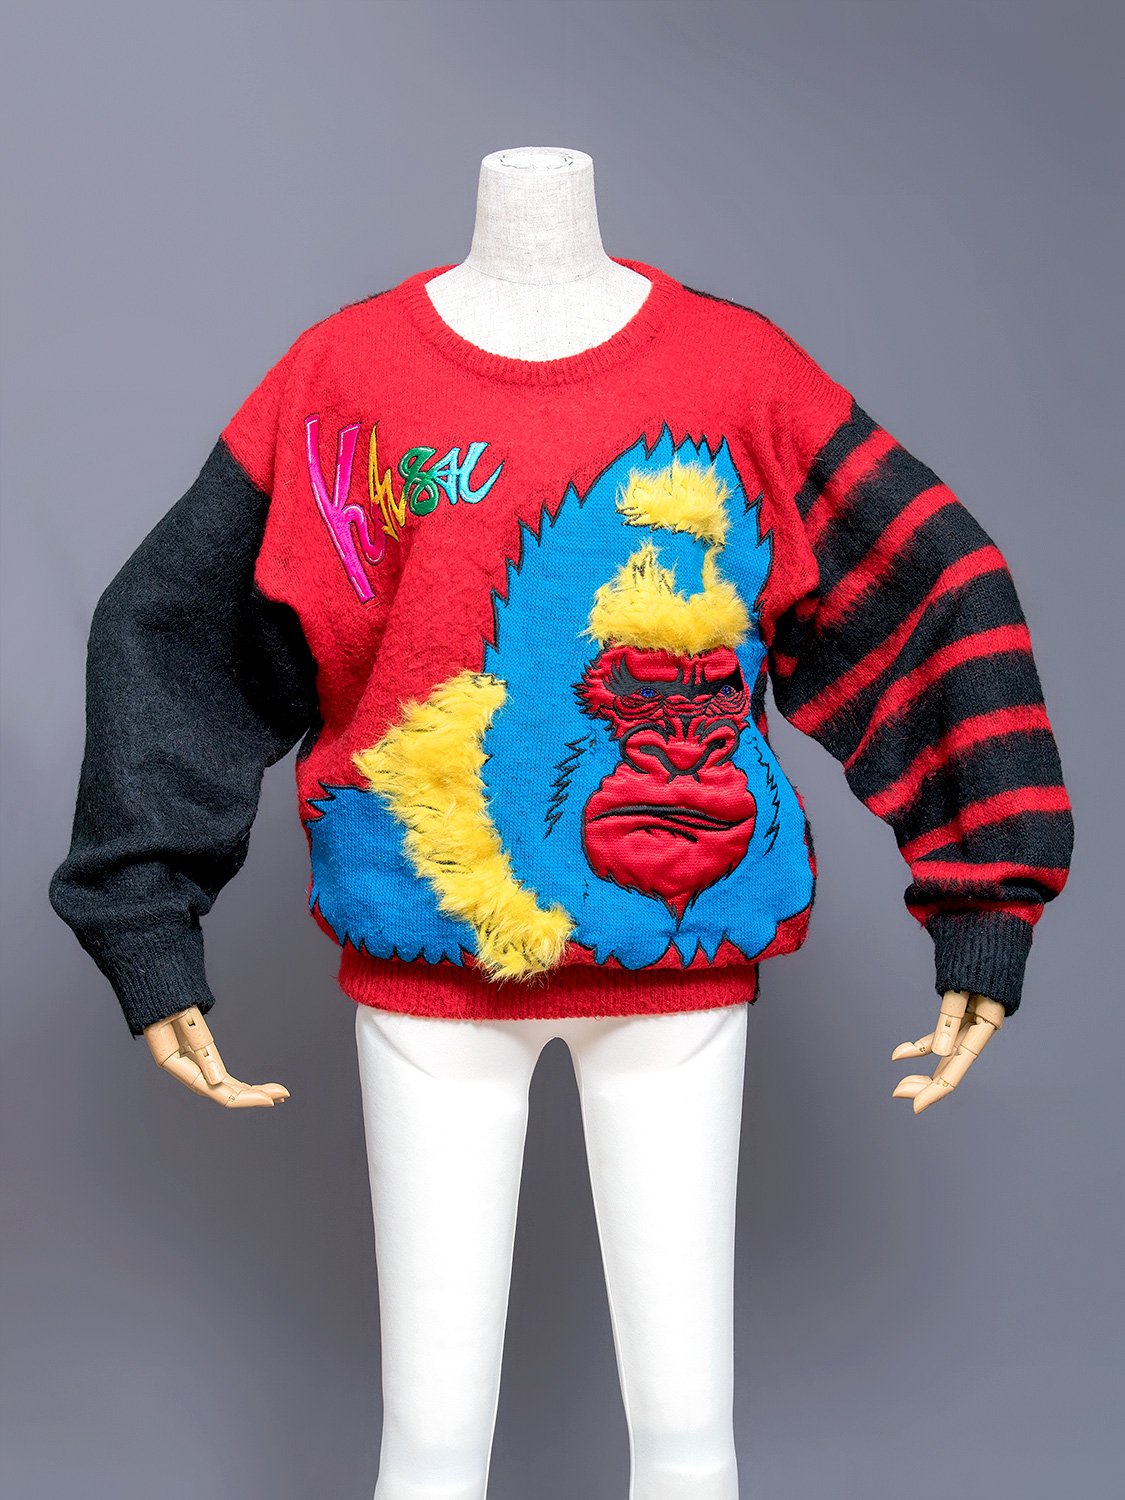 Kansai Yamamoto Gorilla Sweater, 1980s | Japanese Fashion Archive